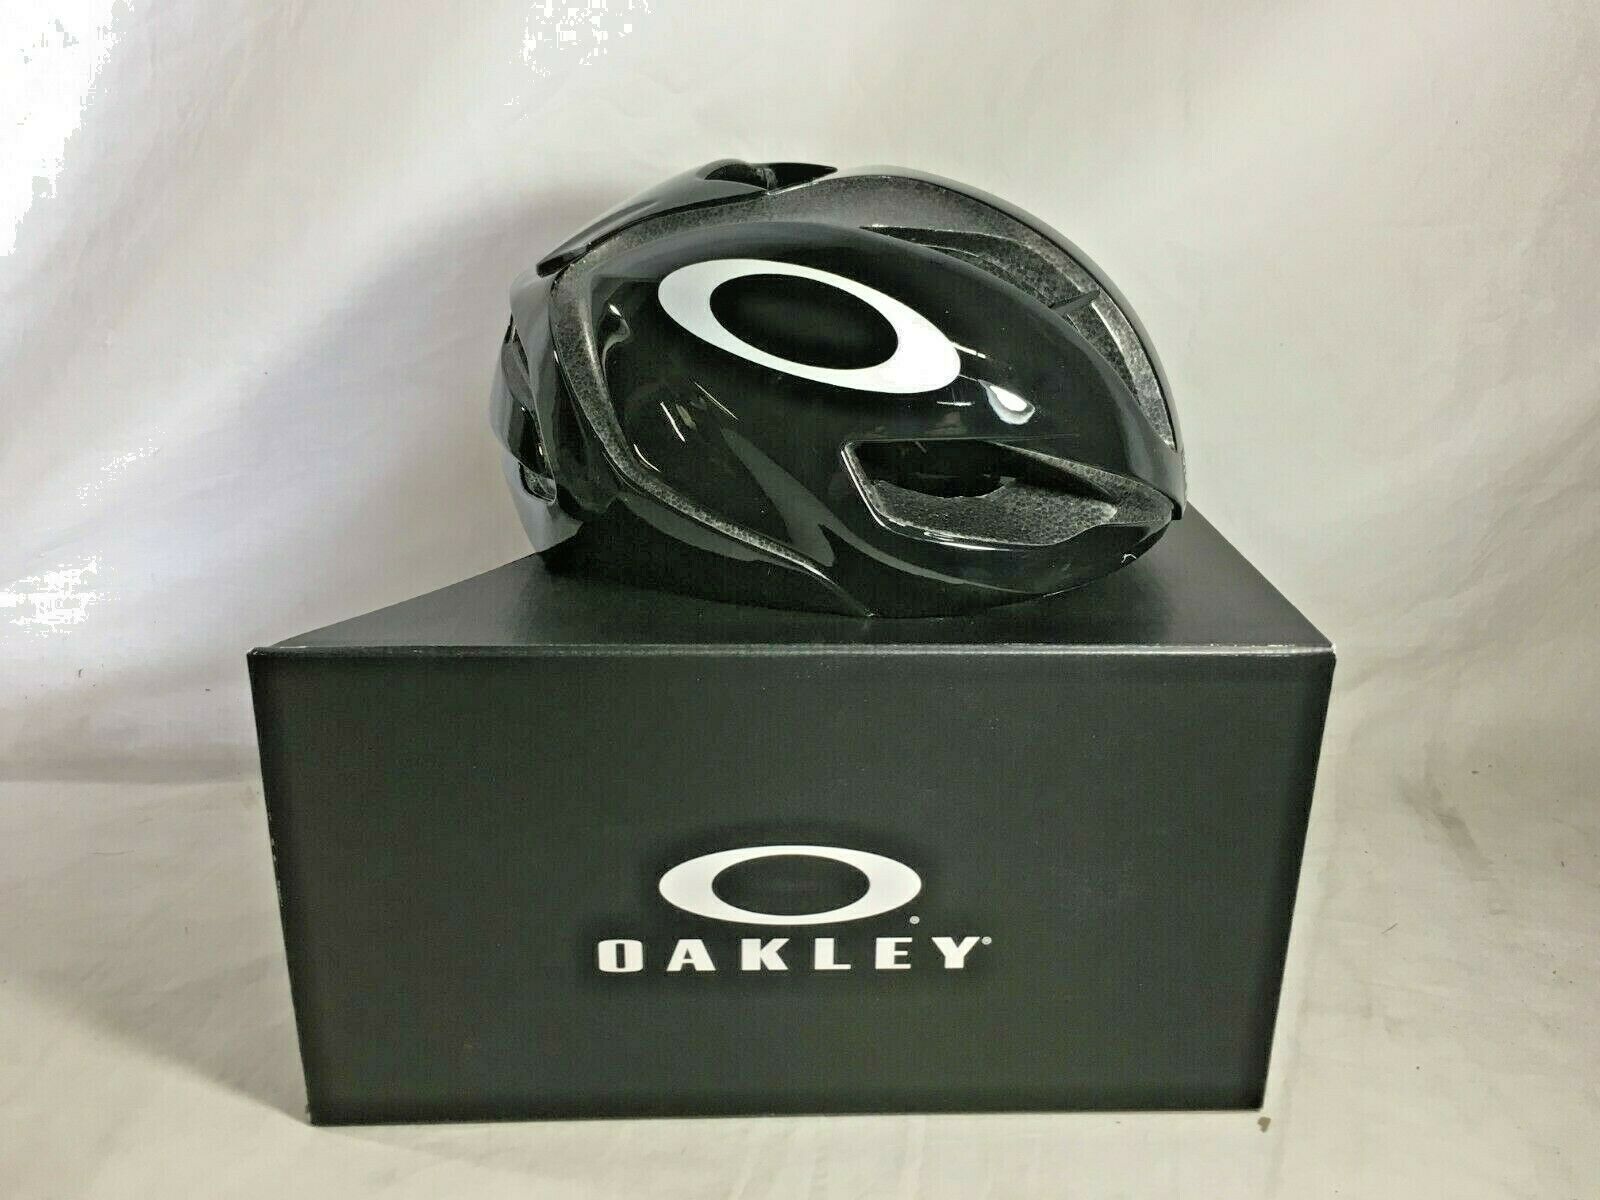 Oakley Aro5 Road Cycling Helmet, Black, Medium